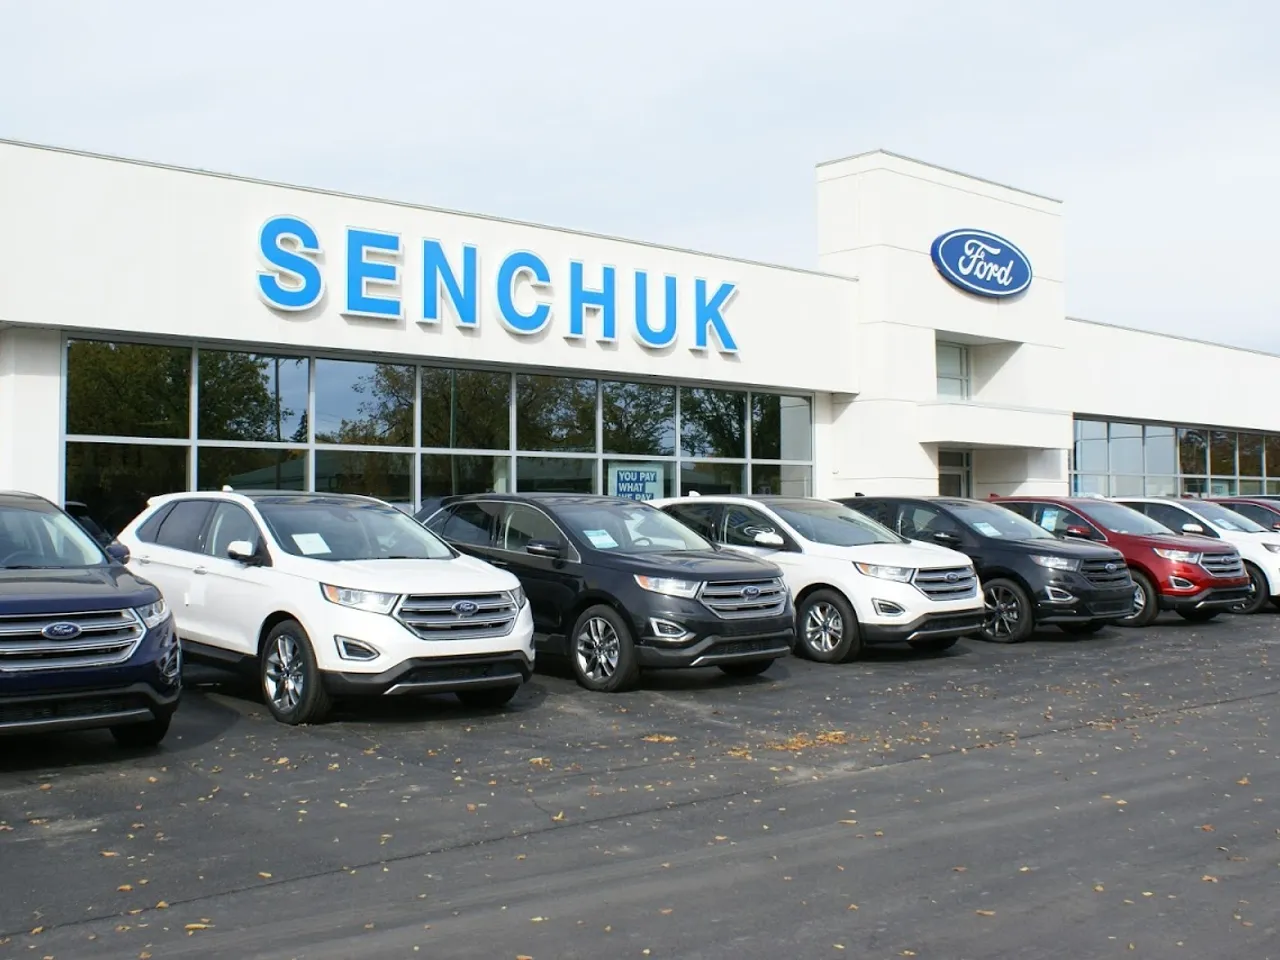 Senchuk Ford Sales Ltd